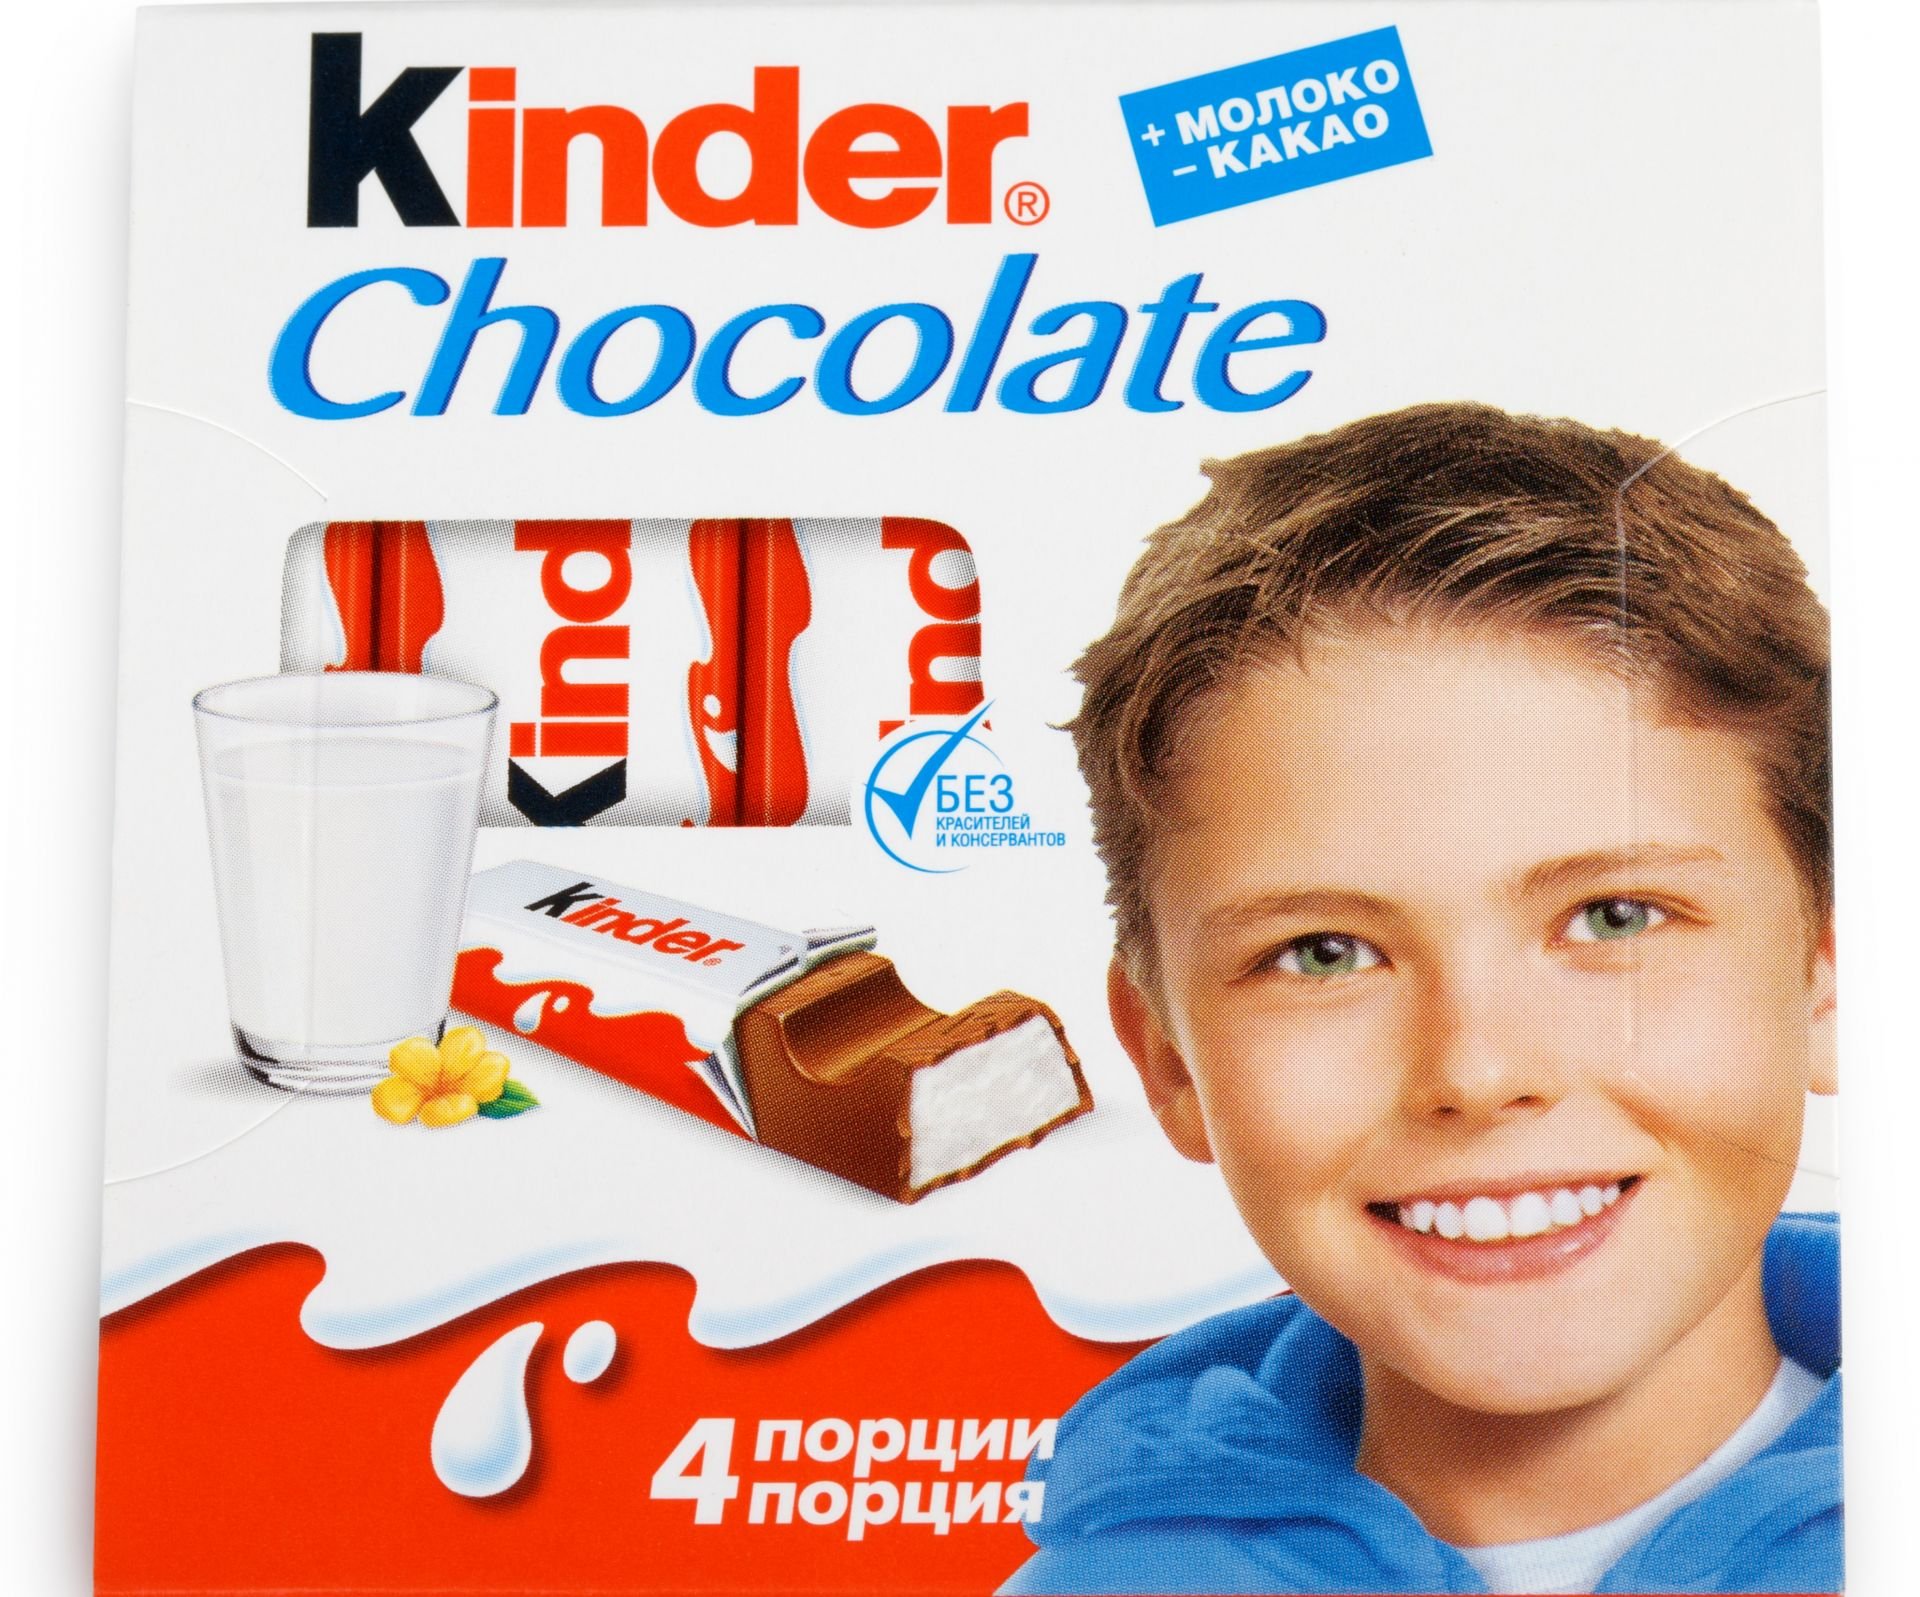 Kinder sind. Гюнтер Эурингер kinder. Мальчик с Киндер шоколада. Киндер мальчик на упаковке. Шоколадка Киндер.